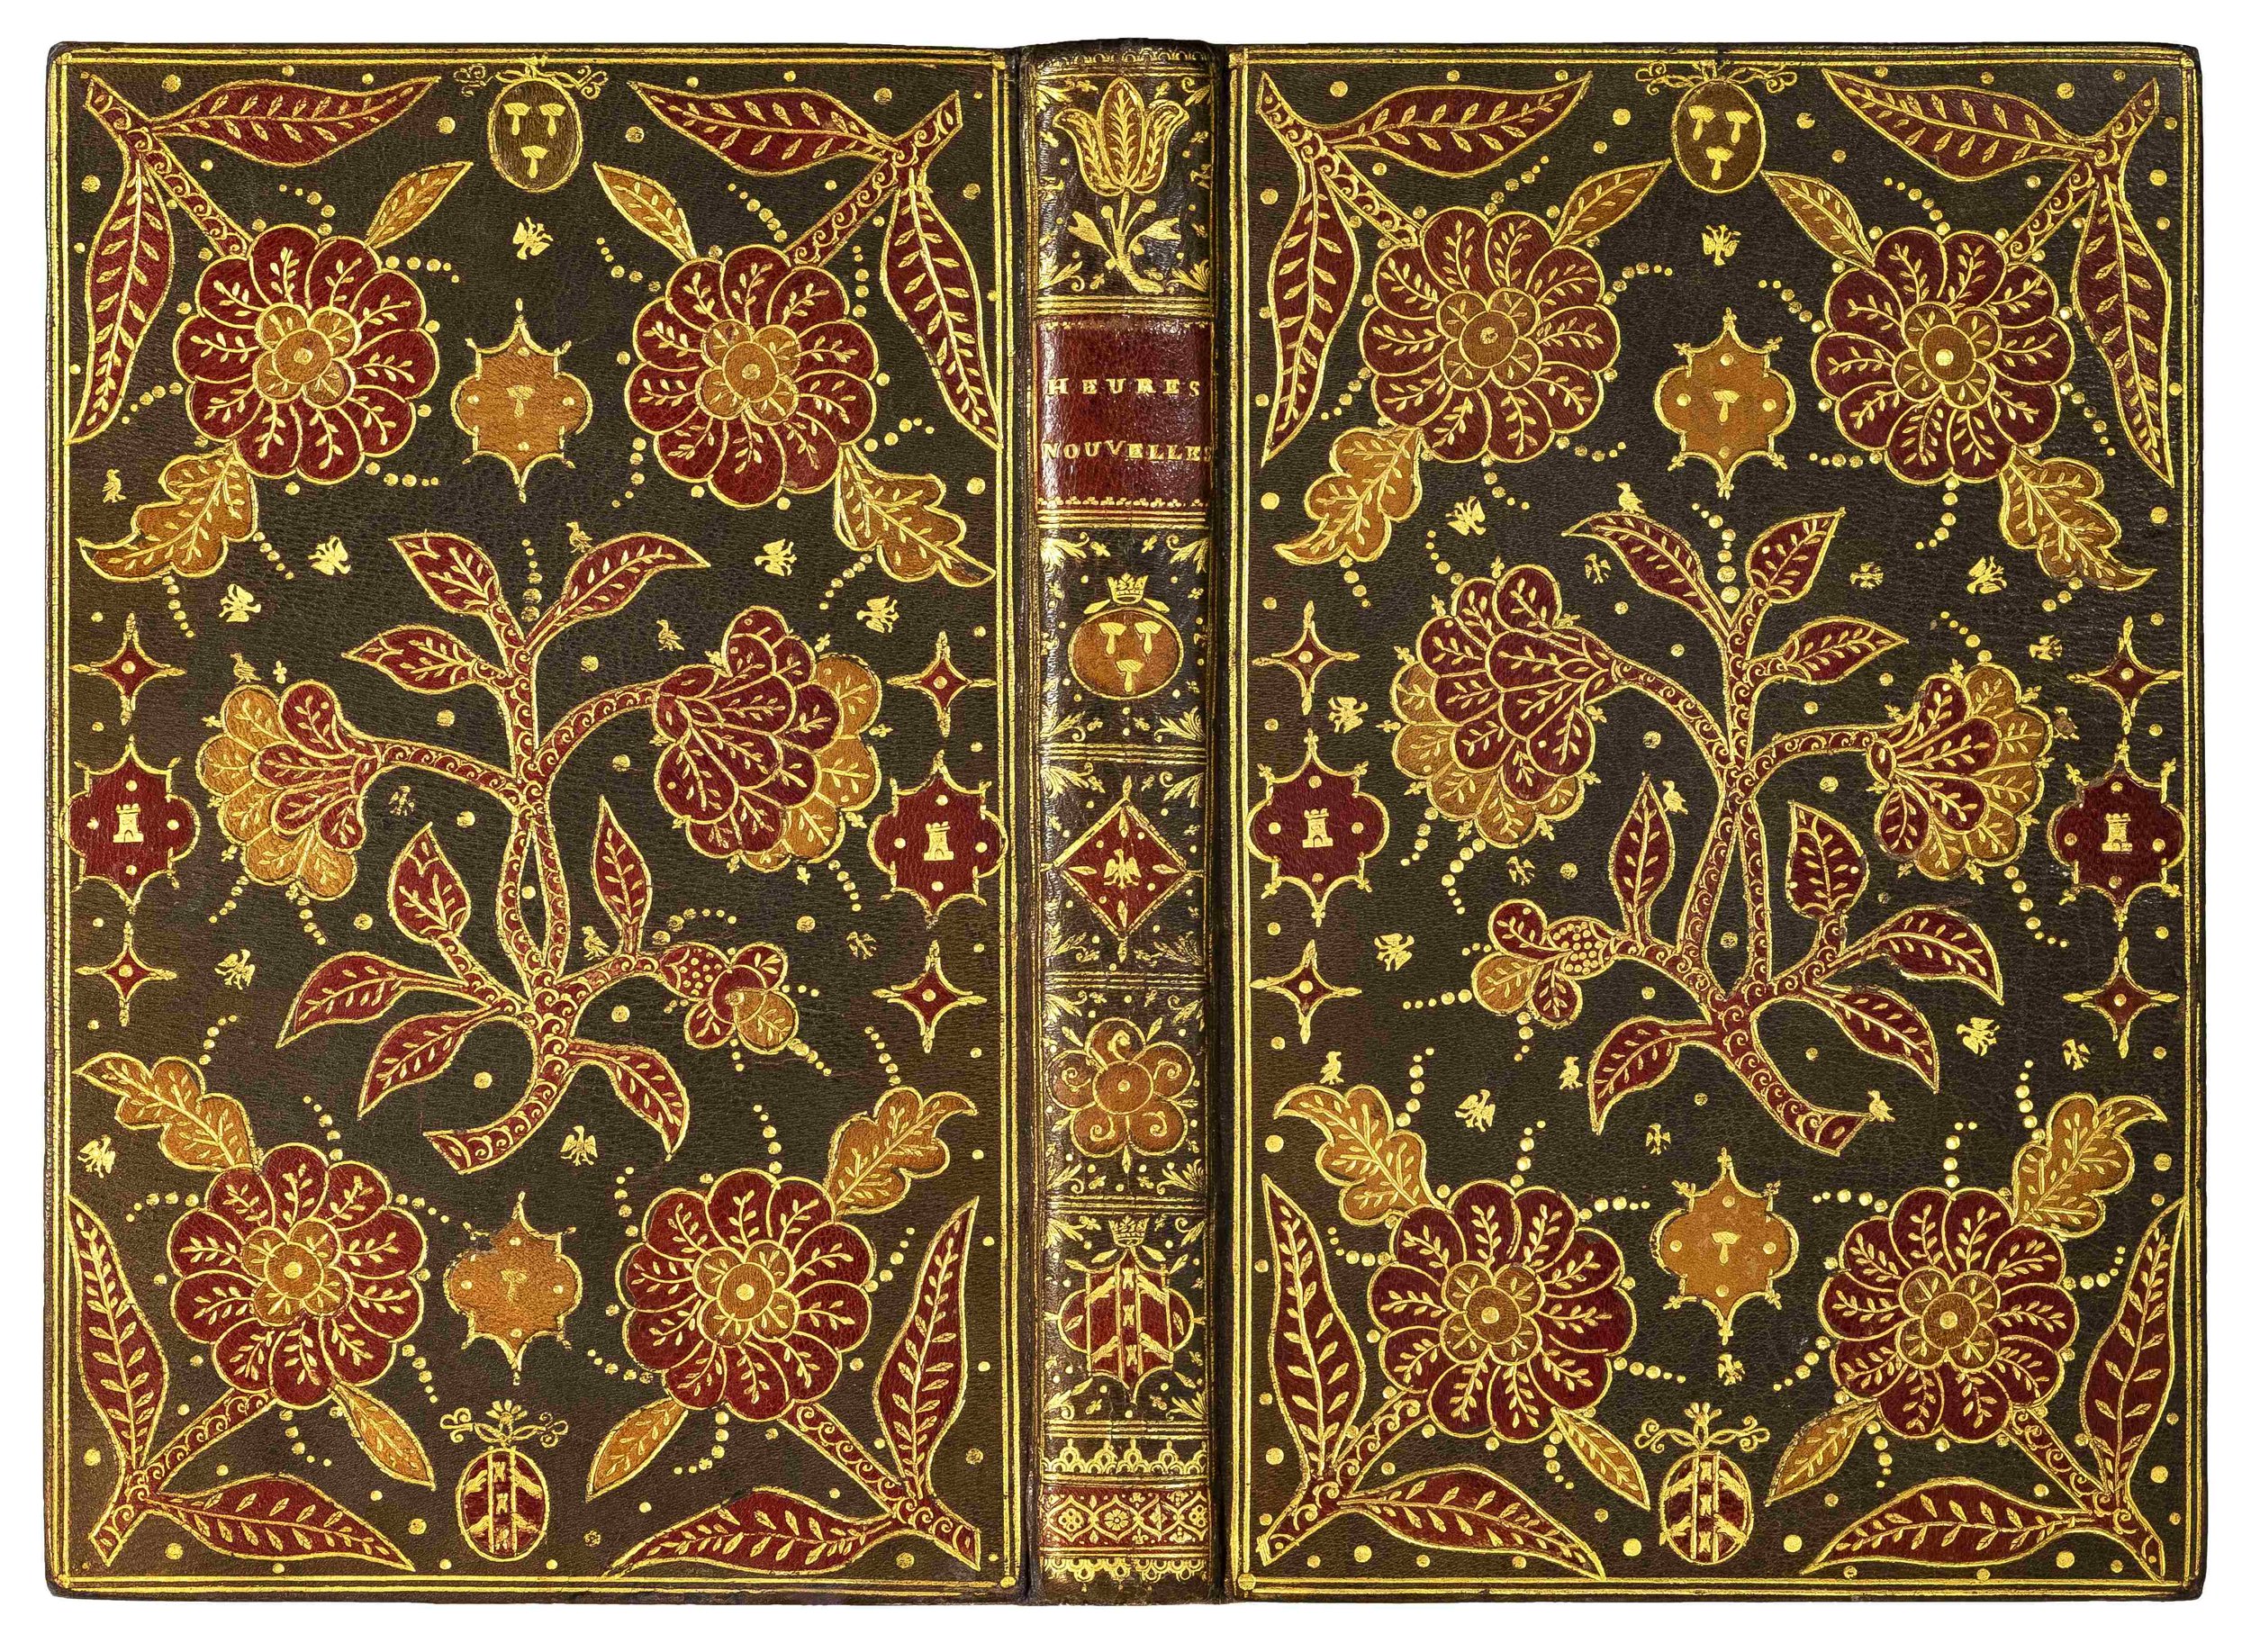 070-jacques-antoine-derome-Inlaid-Binding-morocco-mosaic-reliure-maroquin-18th-century.jpg